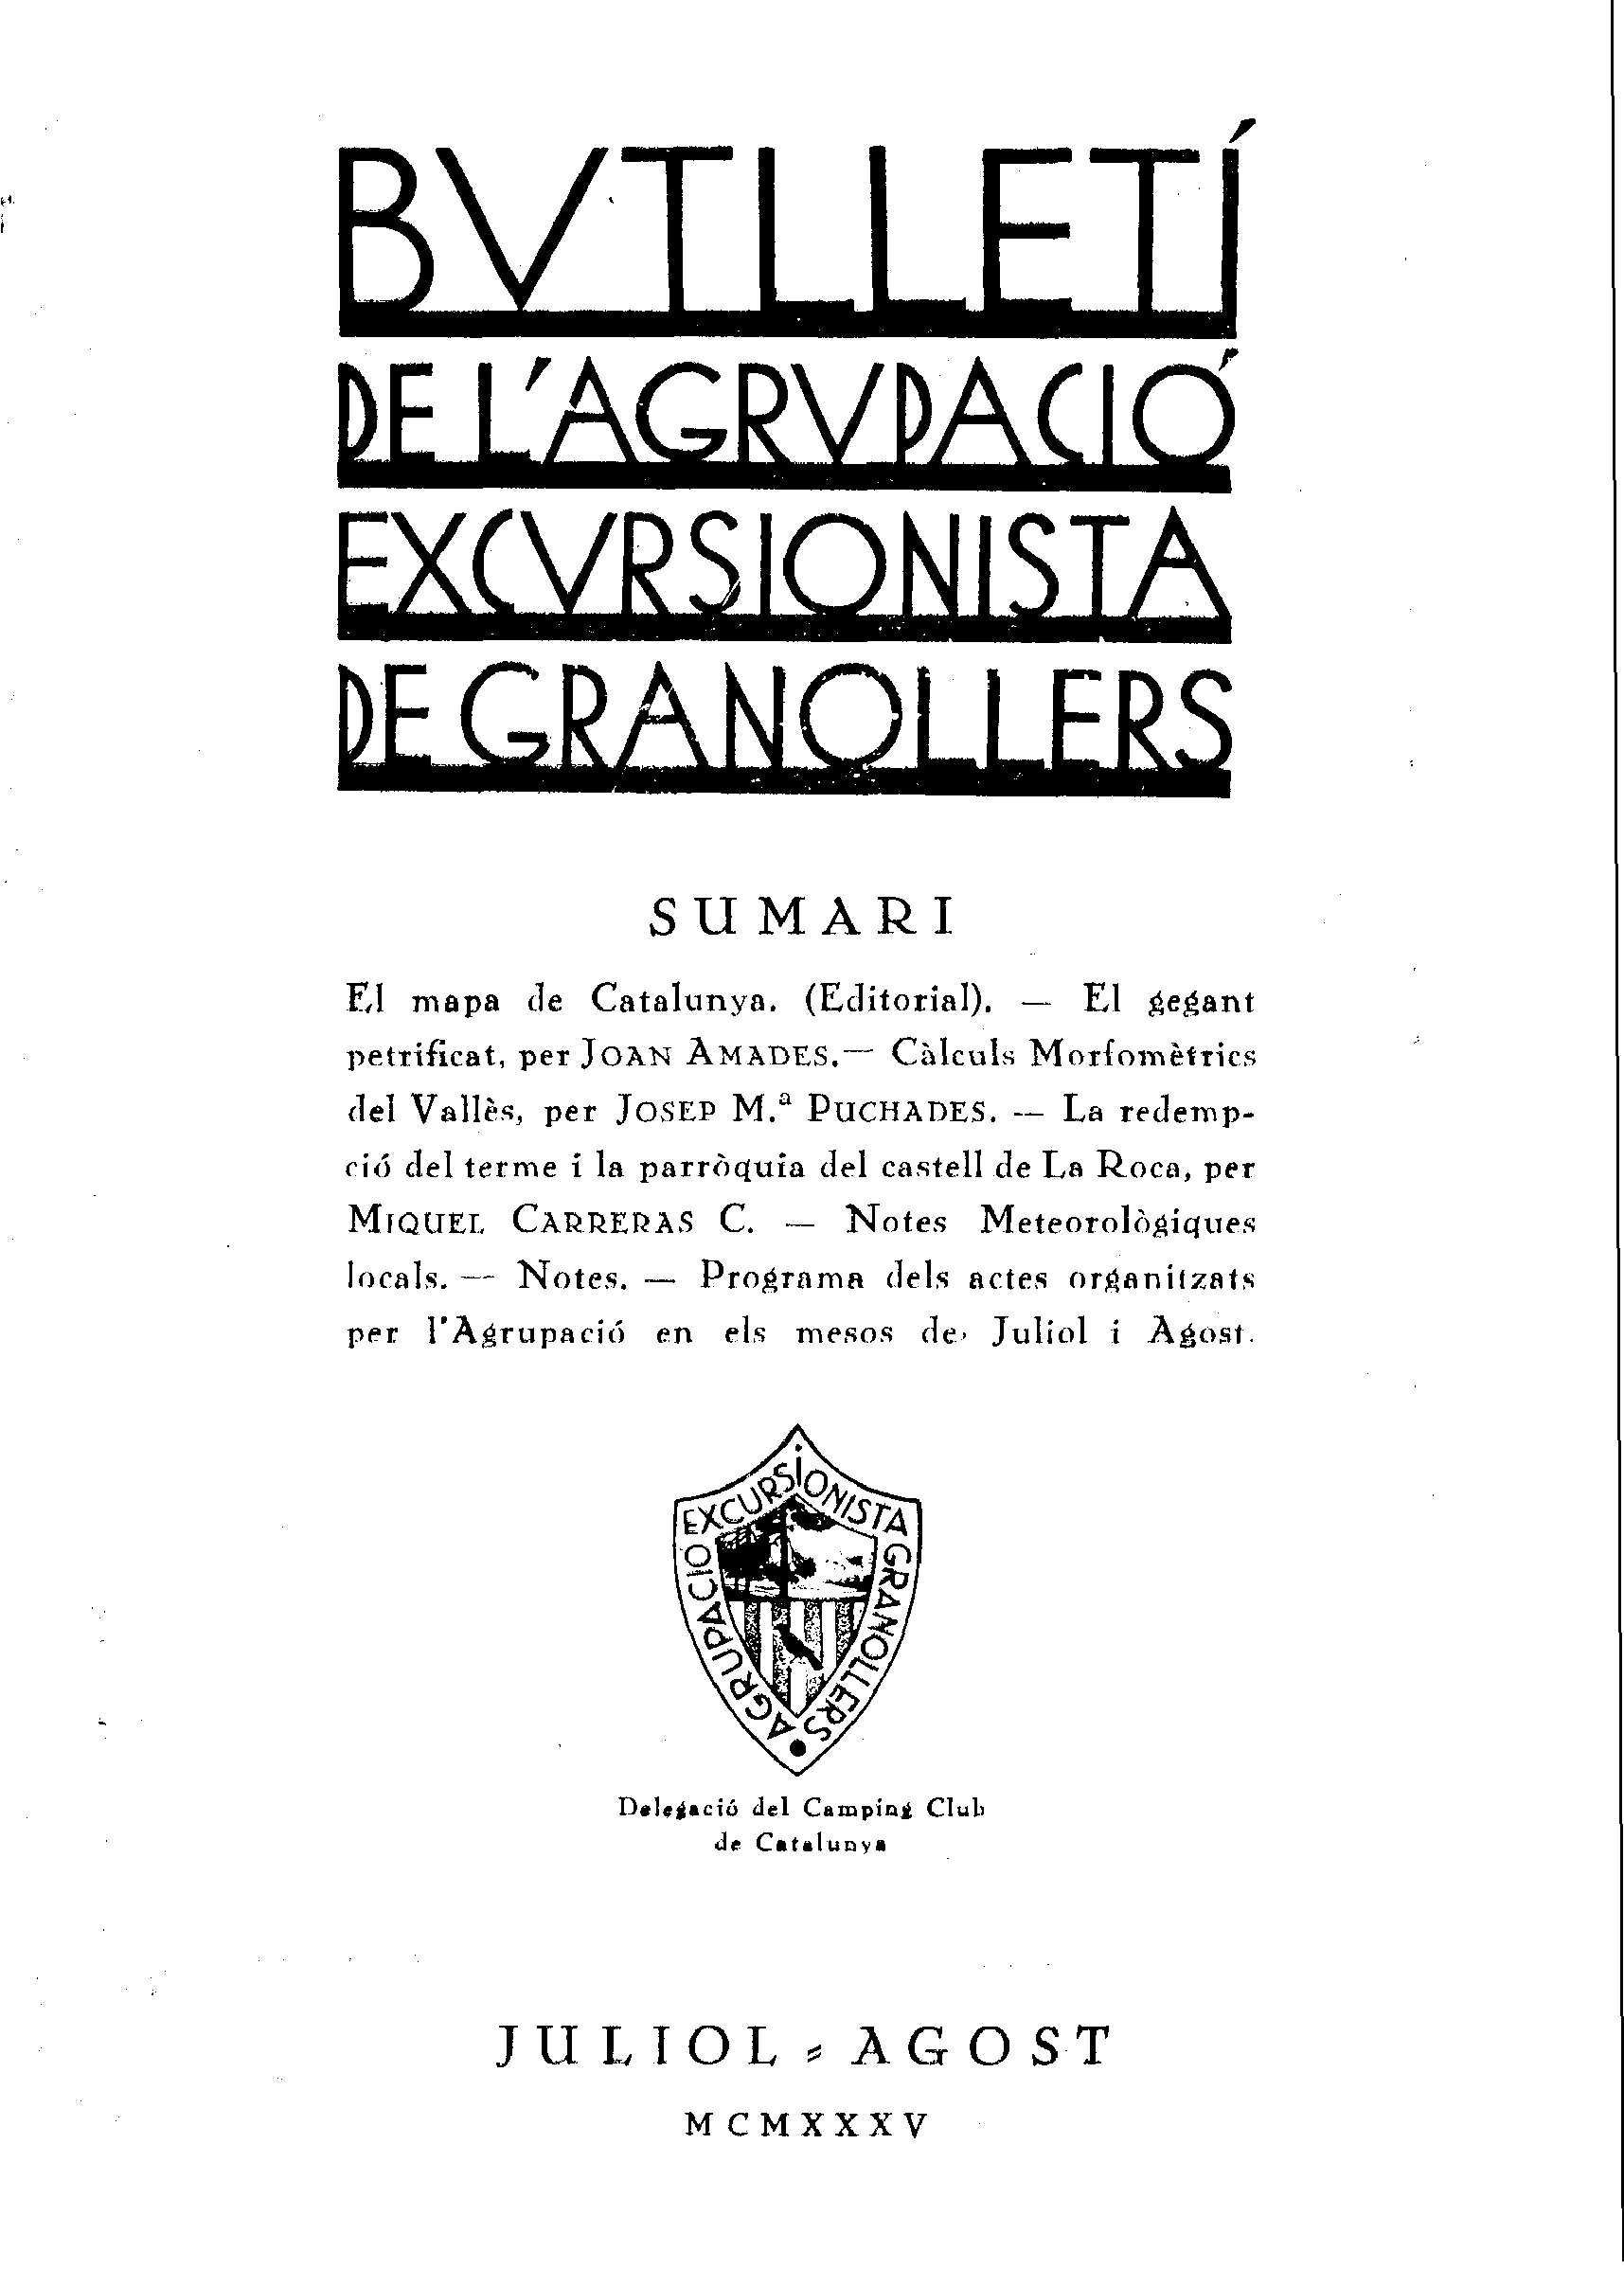 Butlletí de l'Agrupació Excursionista de Granollers, 1/7/1935 [Issue]